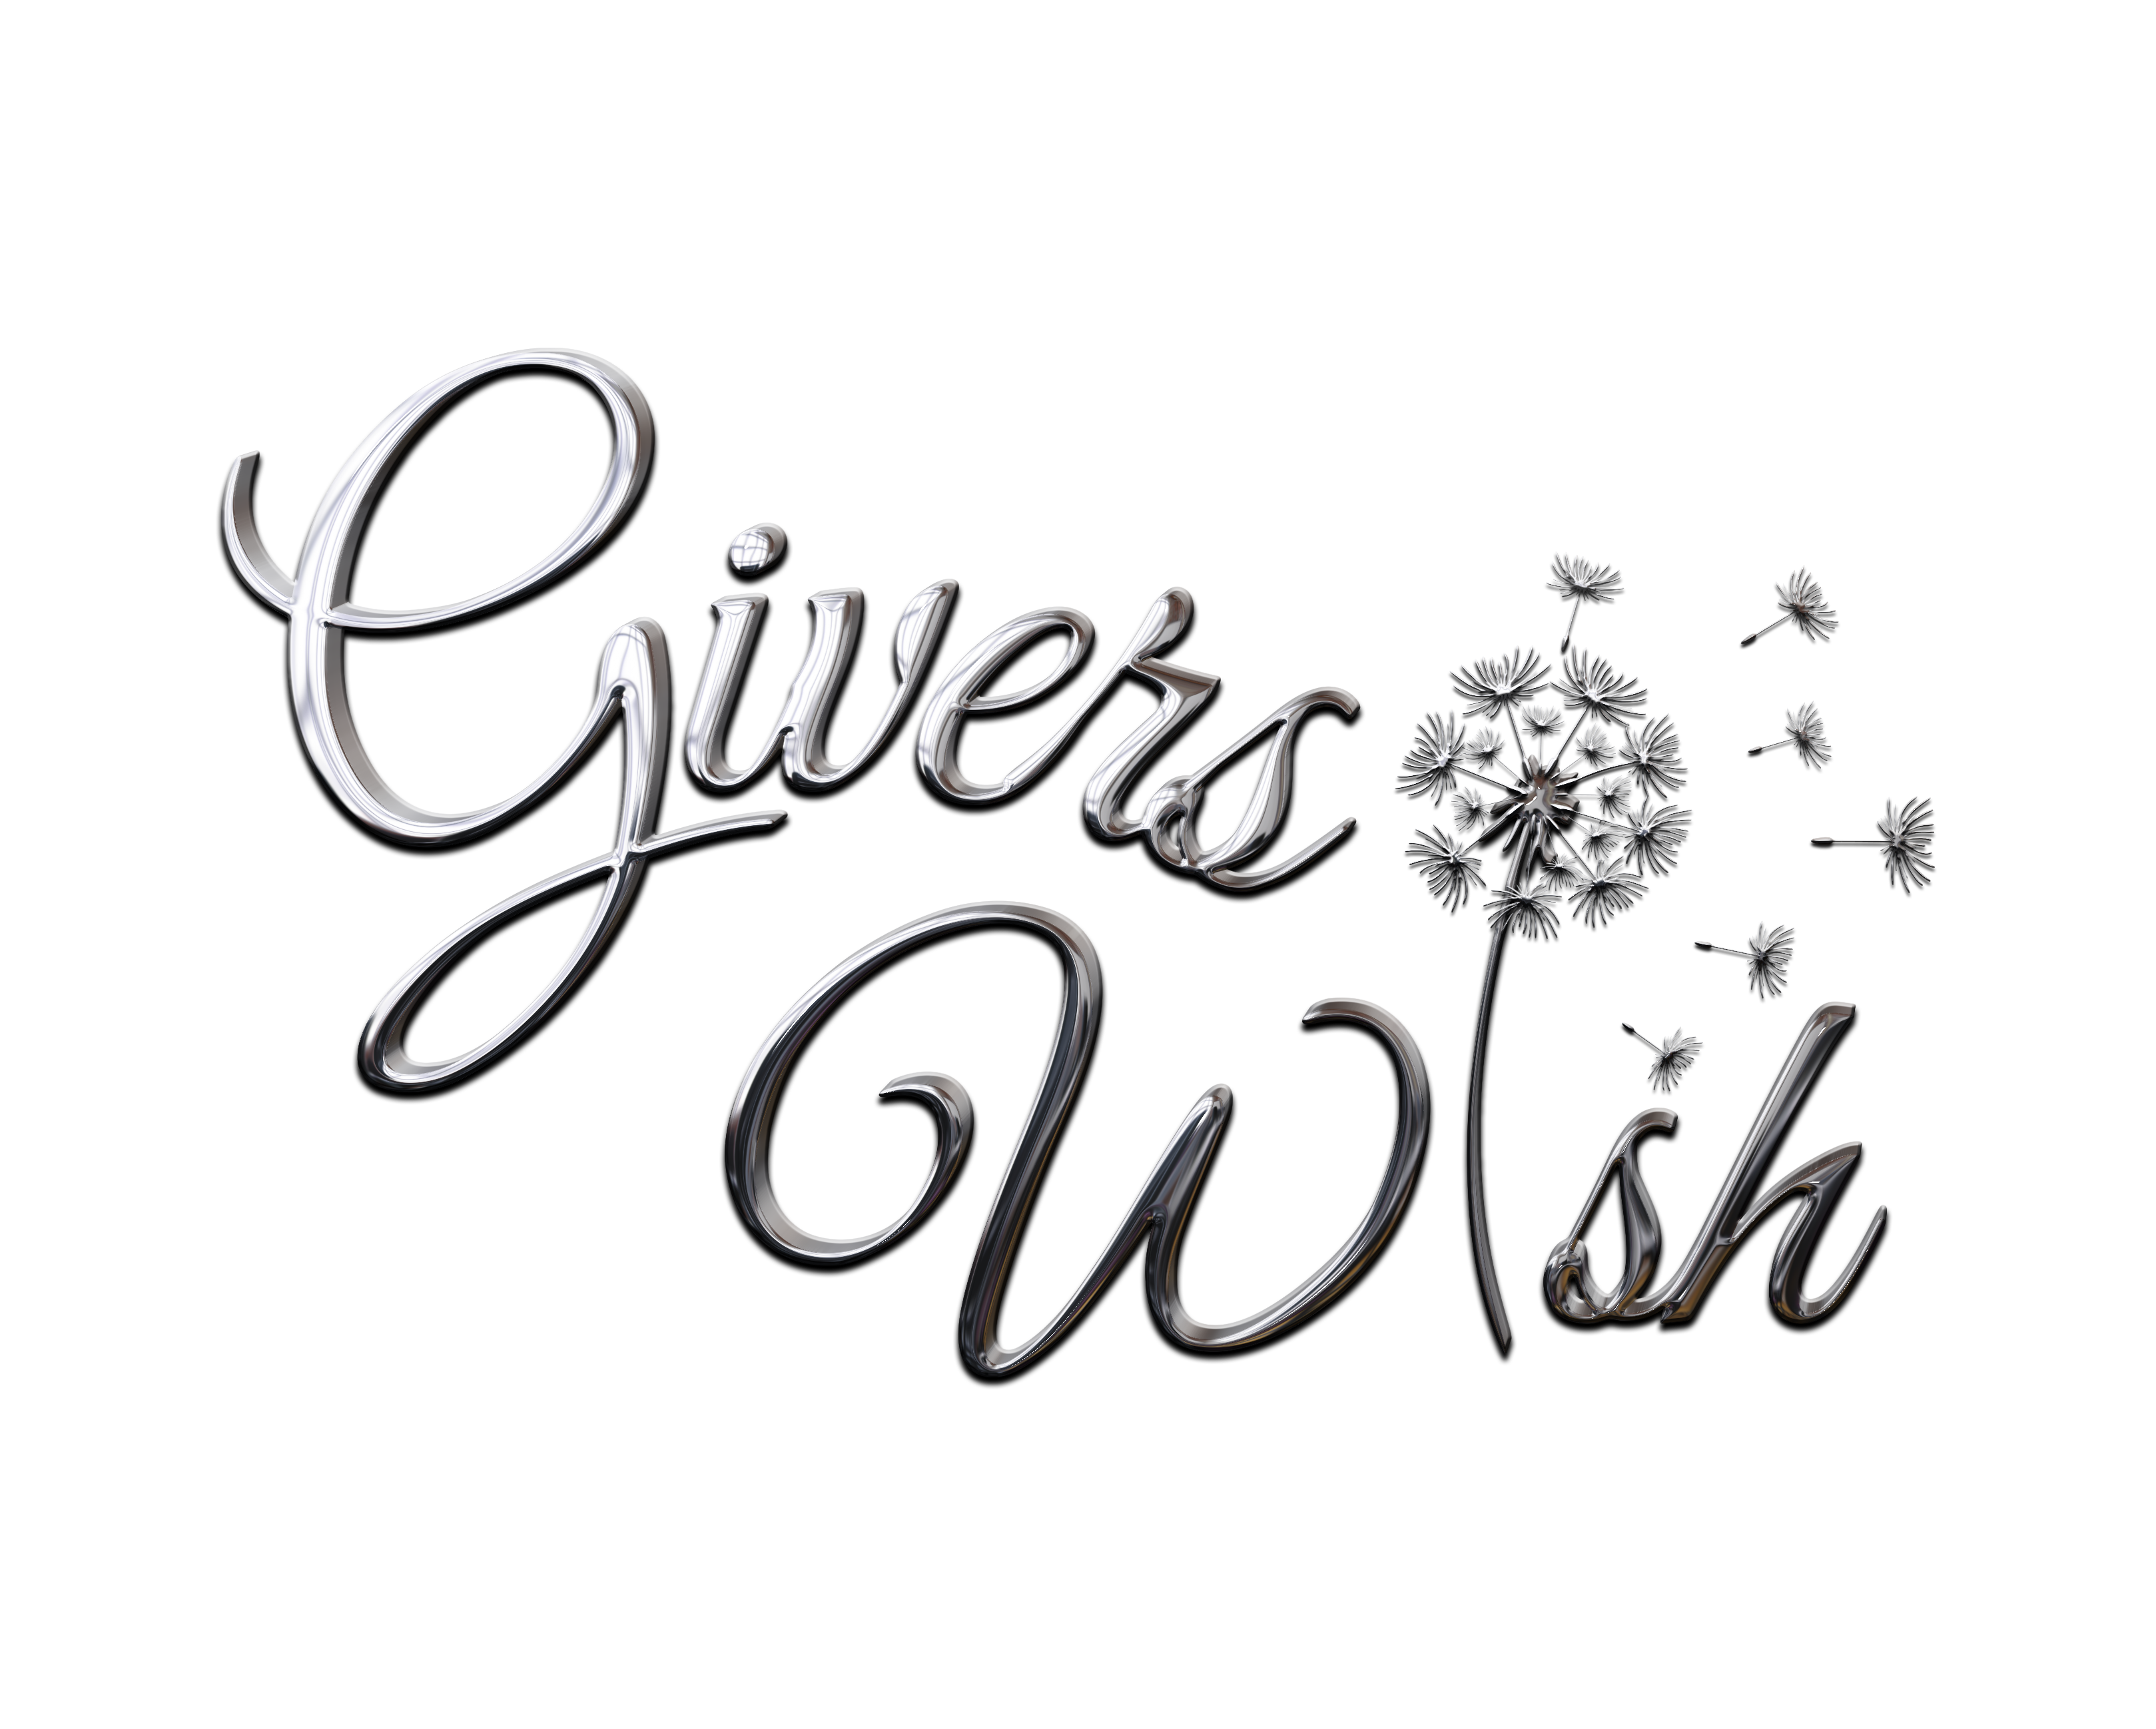 Givers Wish